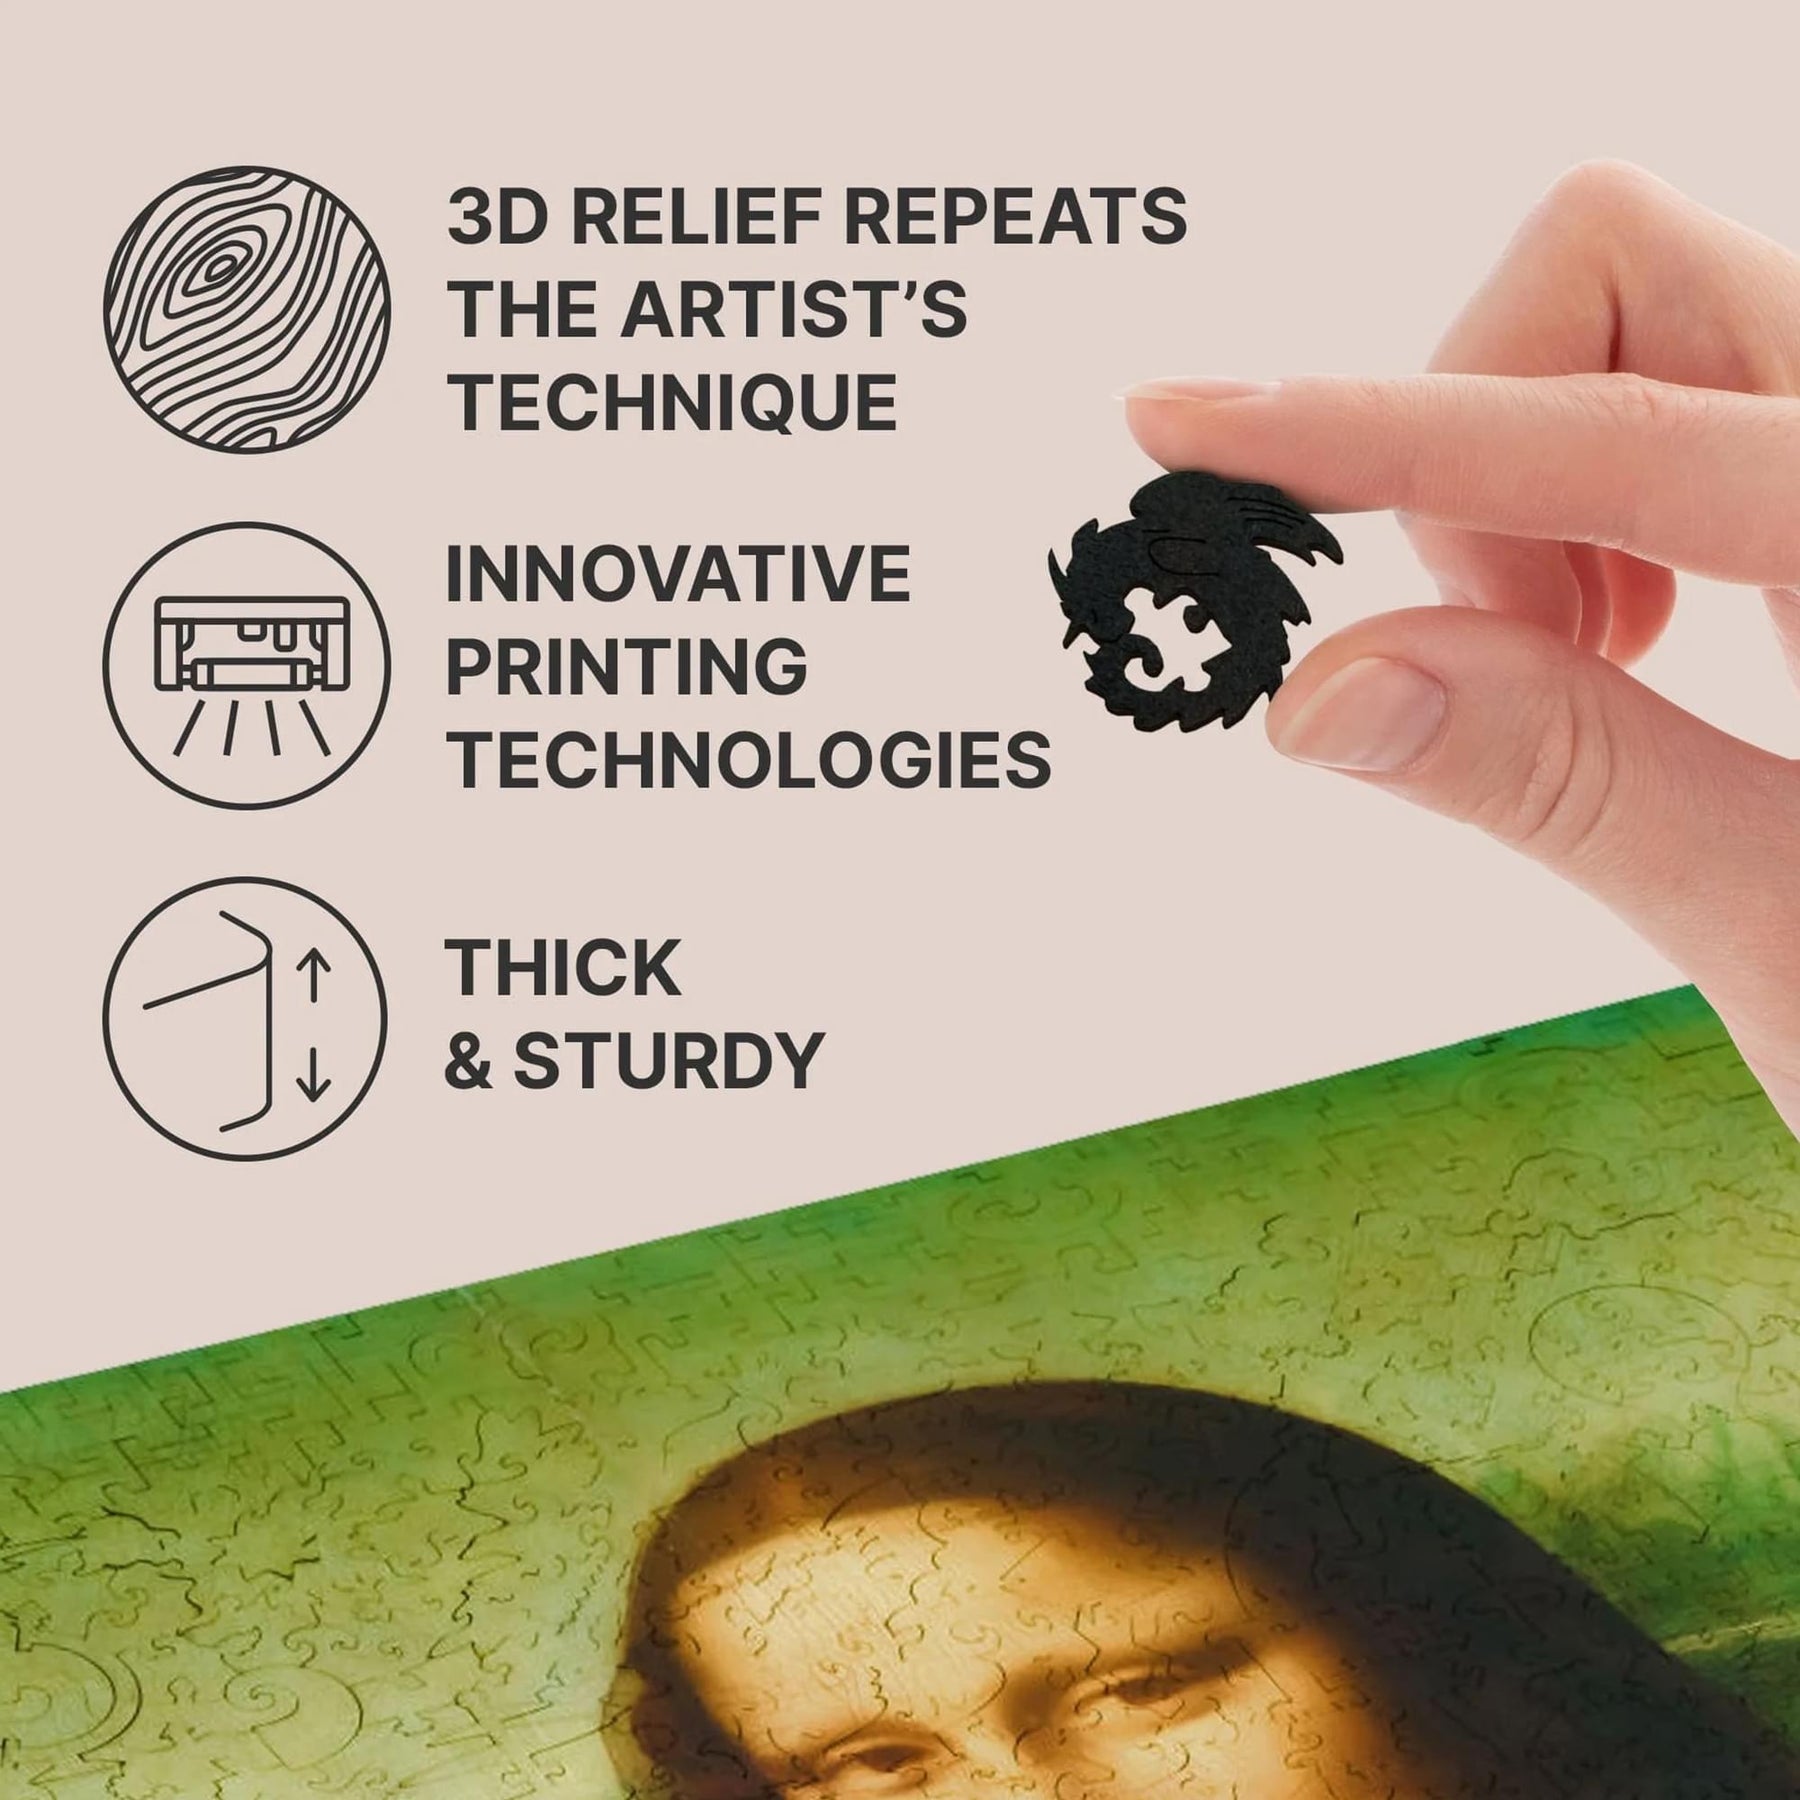 Mona Lisa 1000 Piece Wooden Jigsaw Puzzle